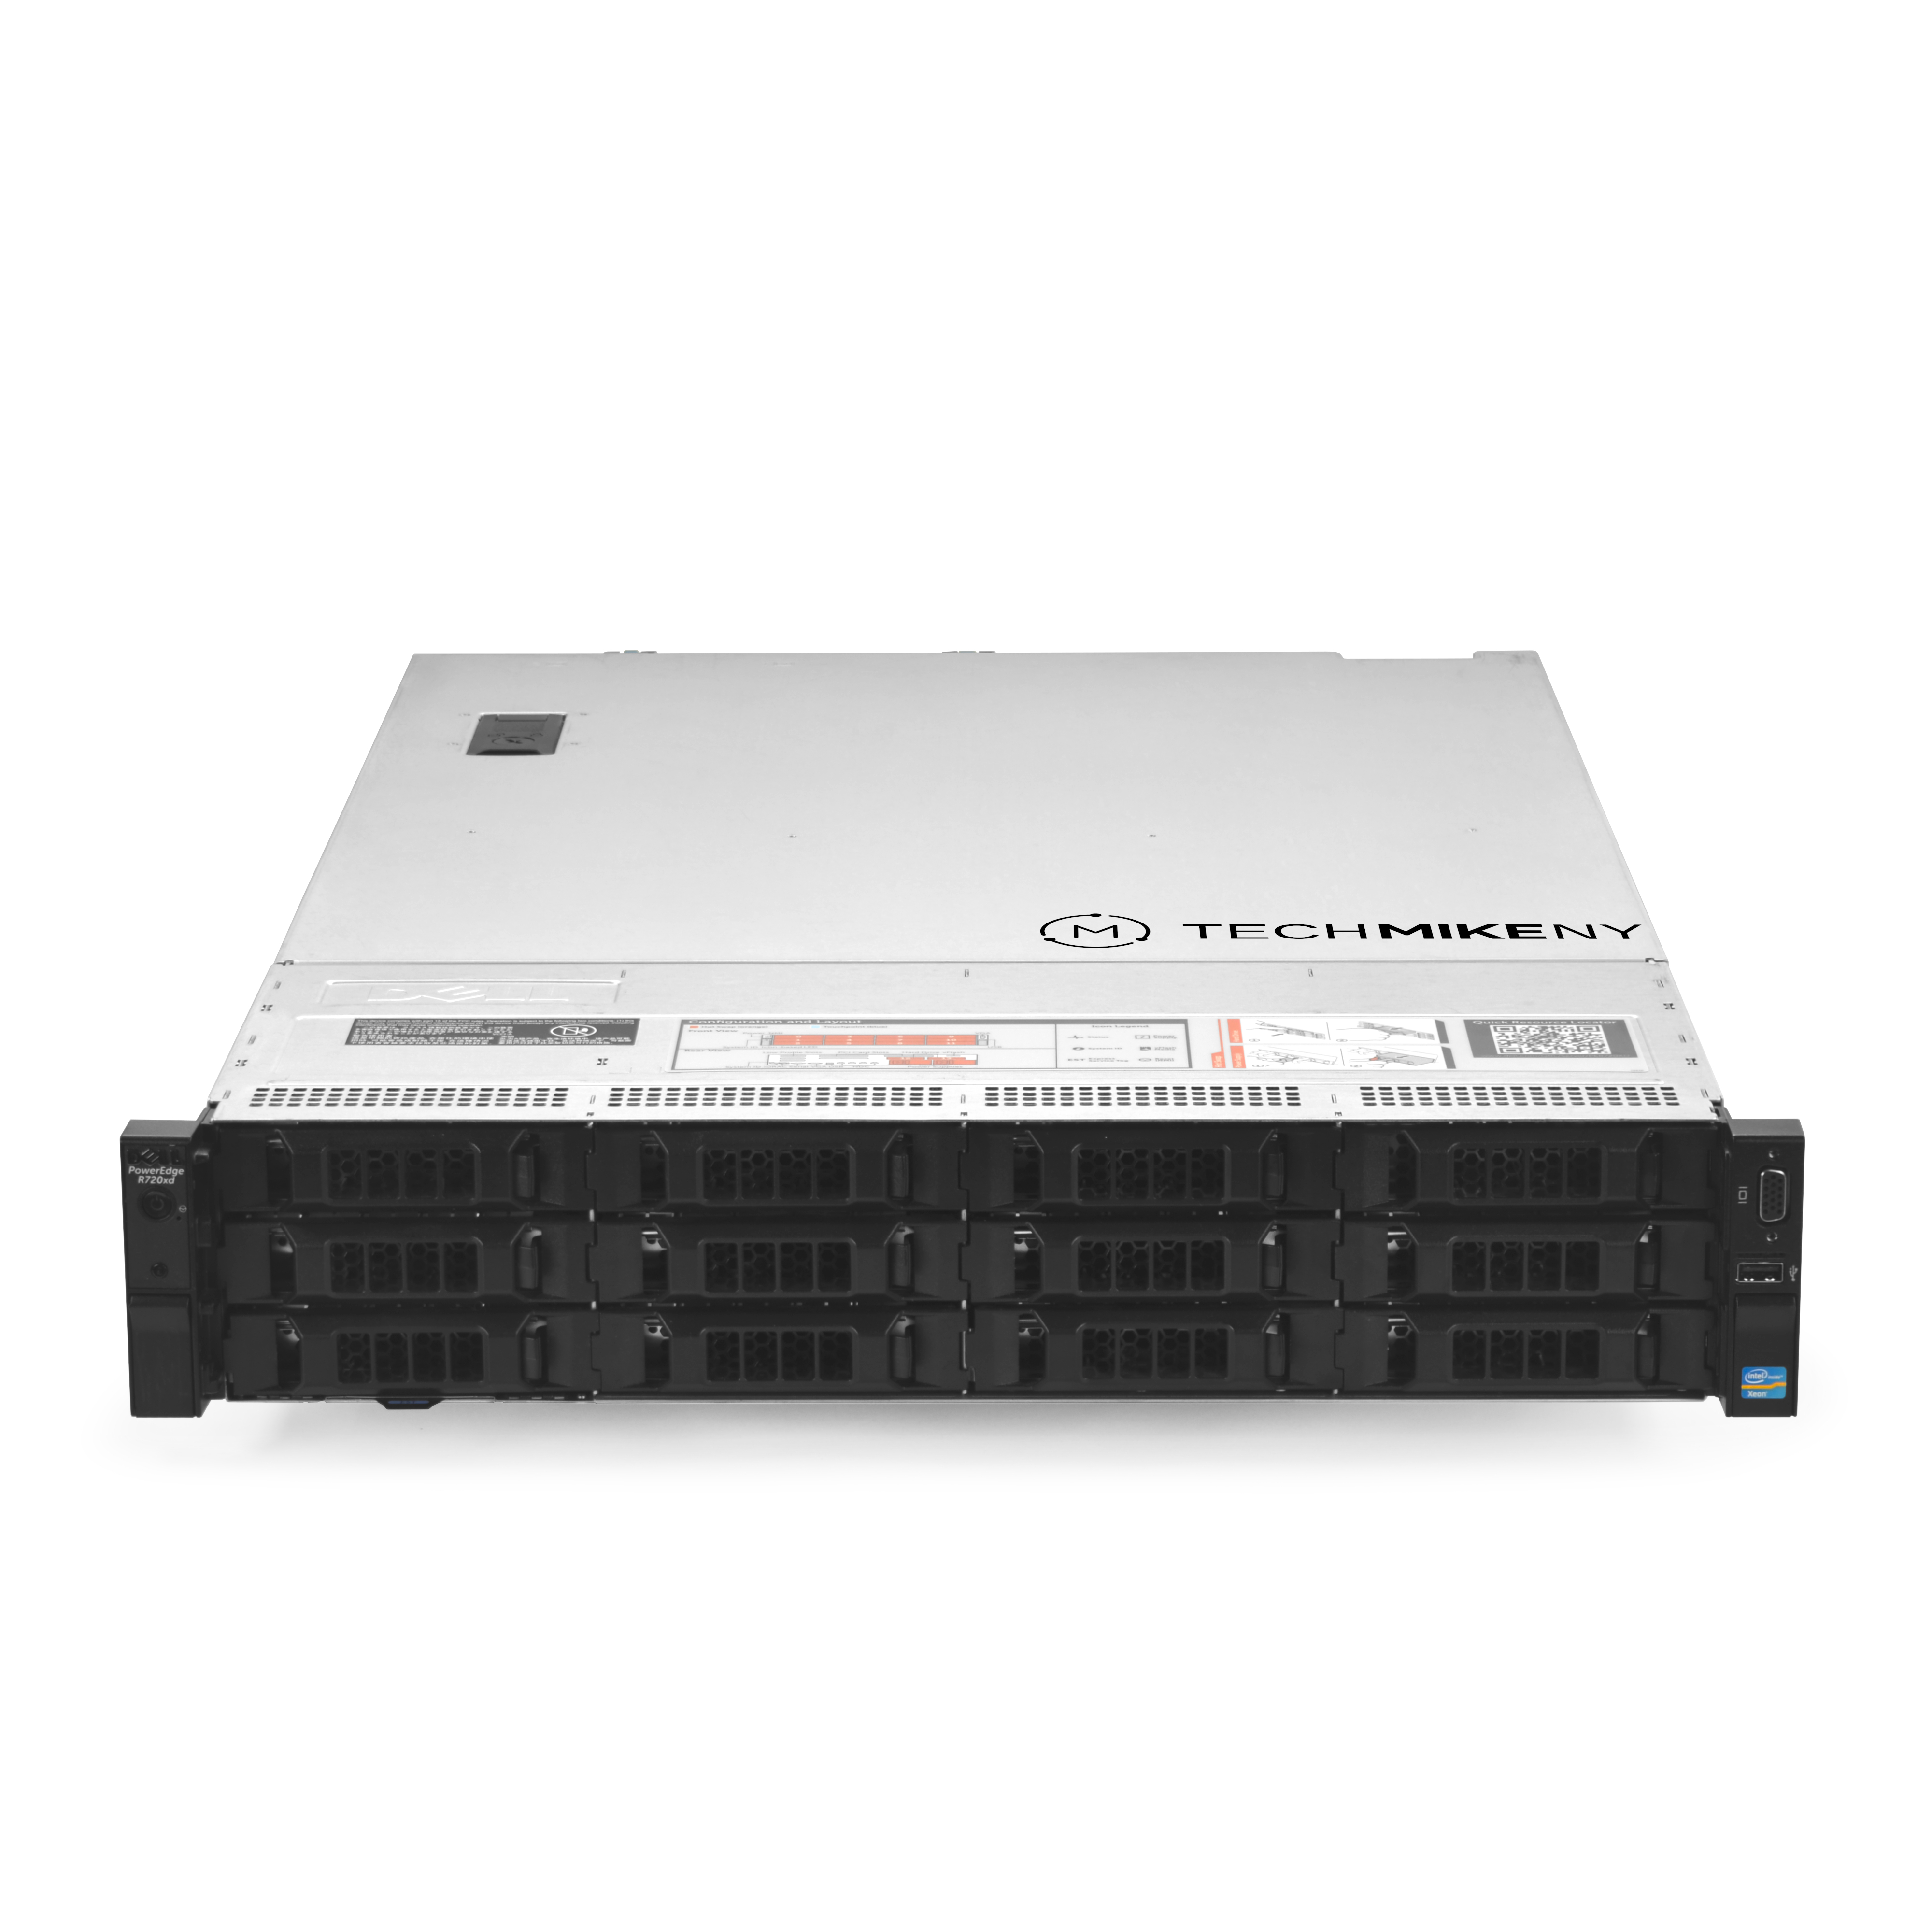 Dell Poweredge R720xd Server E5 2620v2 2 10ghz 12 Core 64gb H710 530